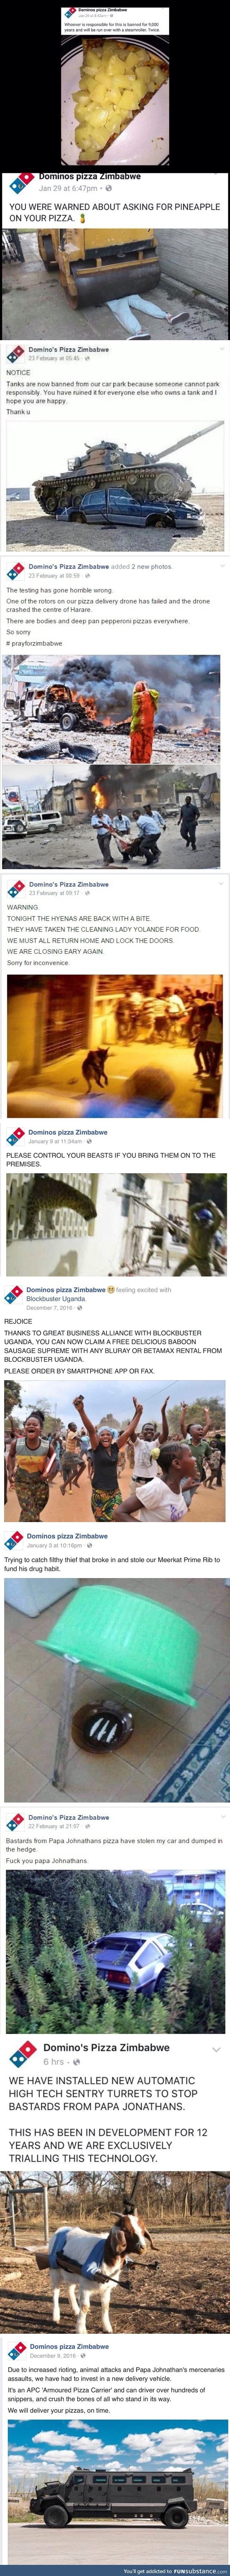 Dominos pizza zimbabwe compilation